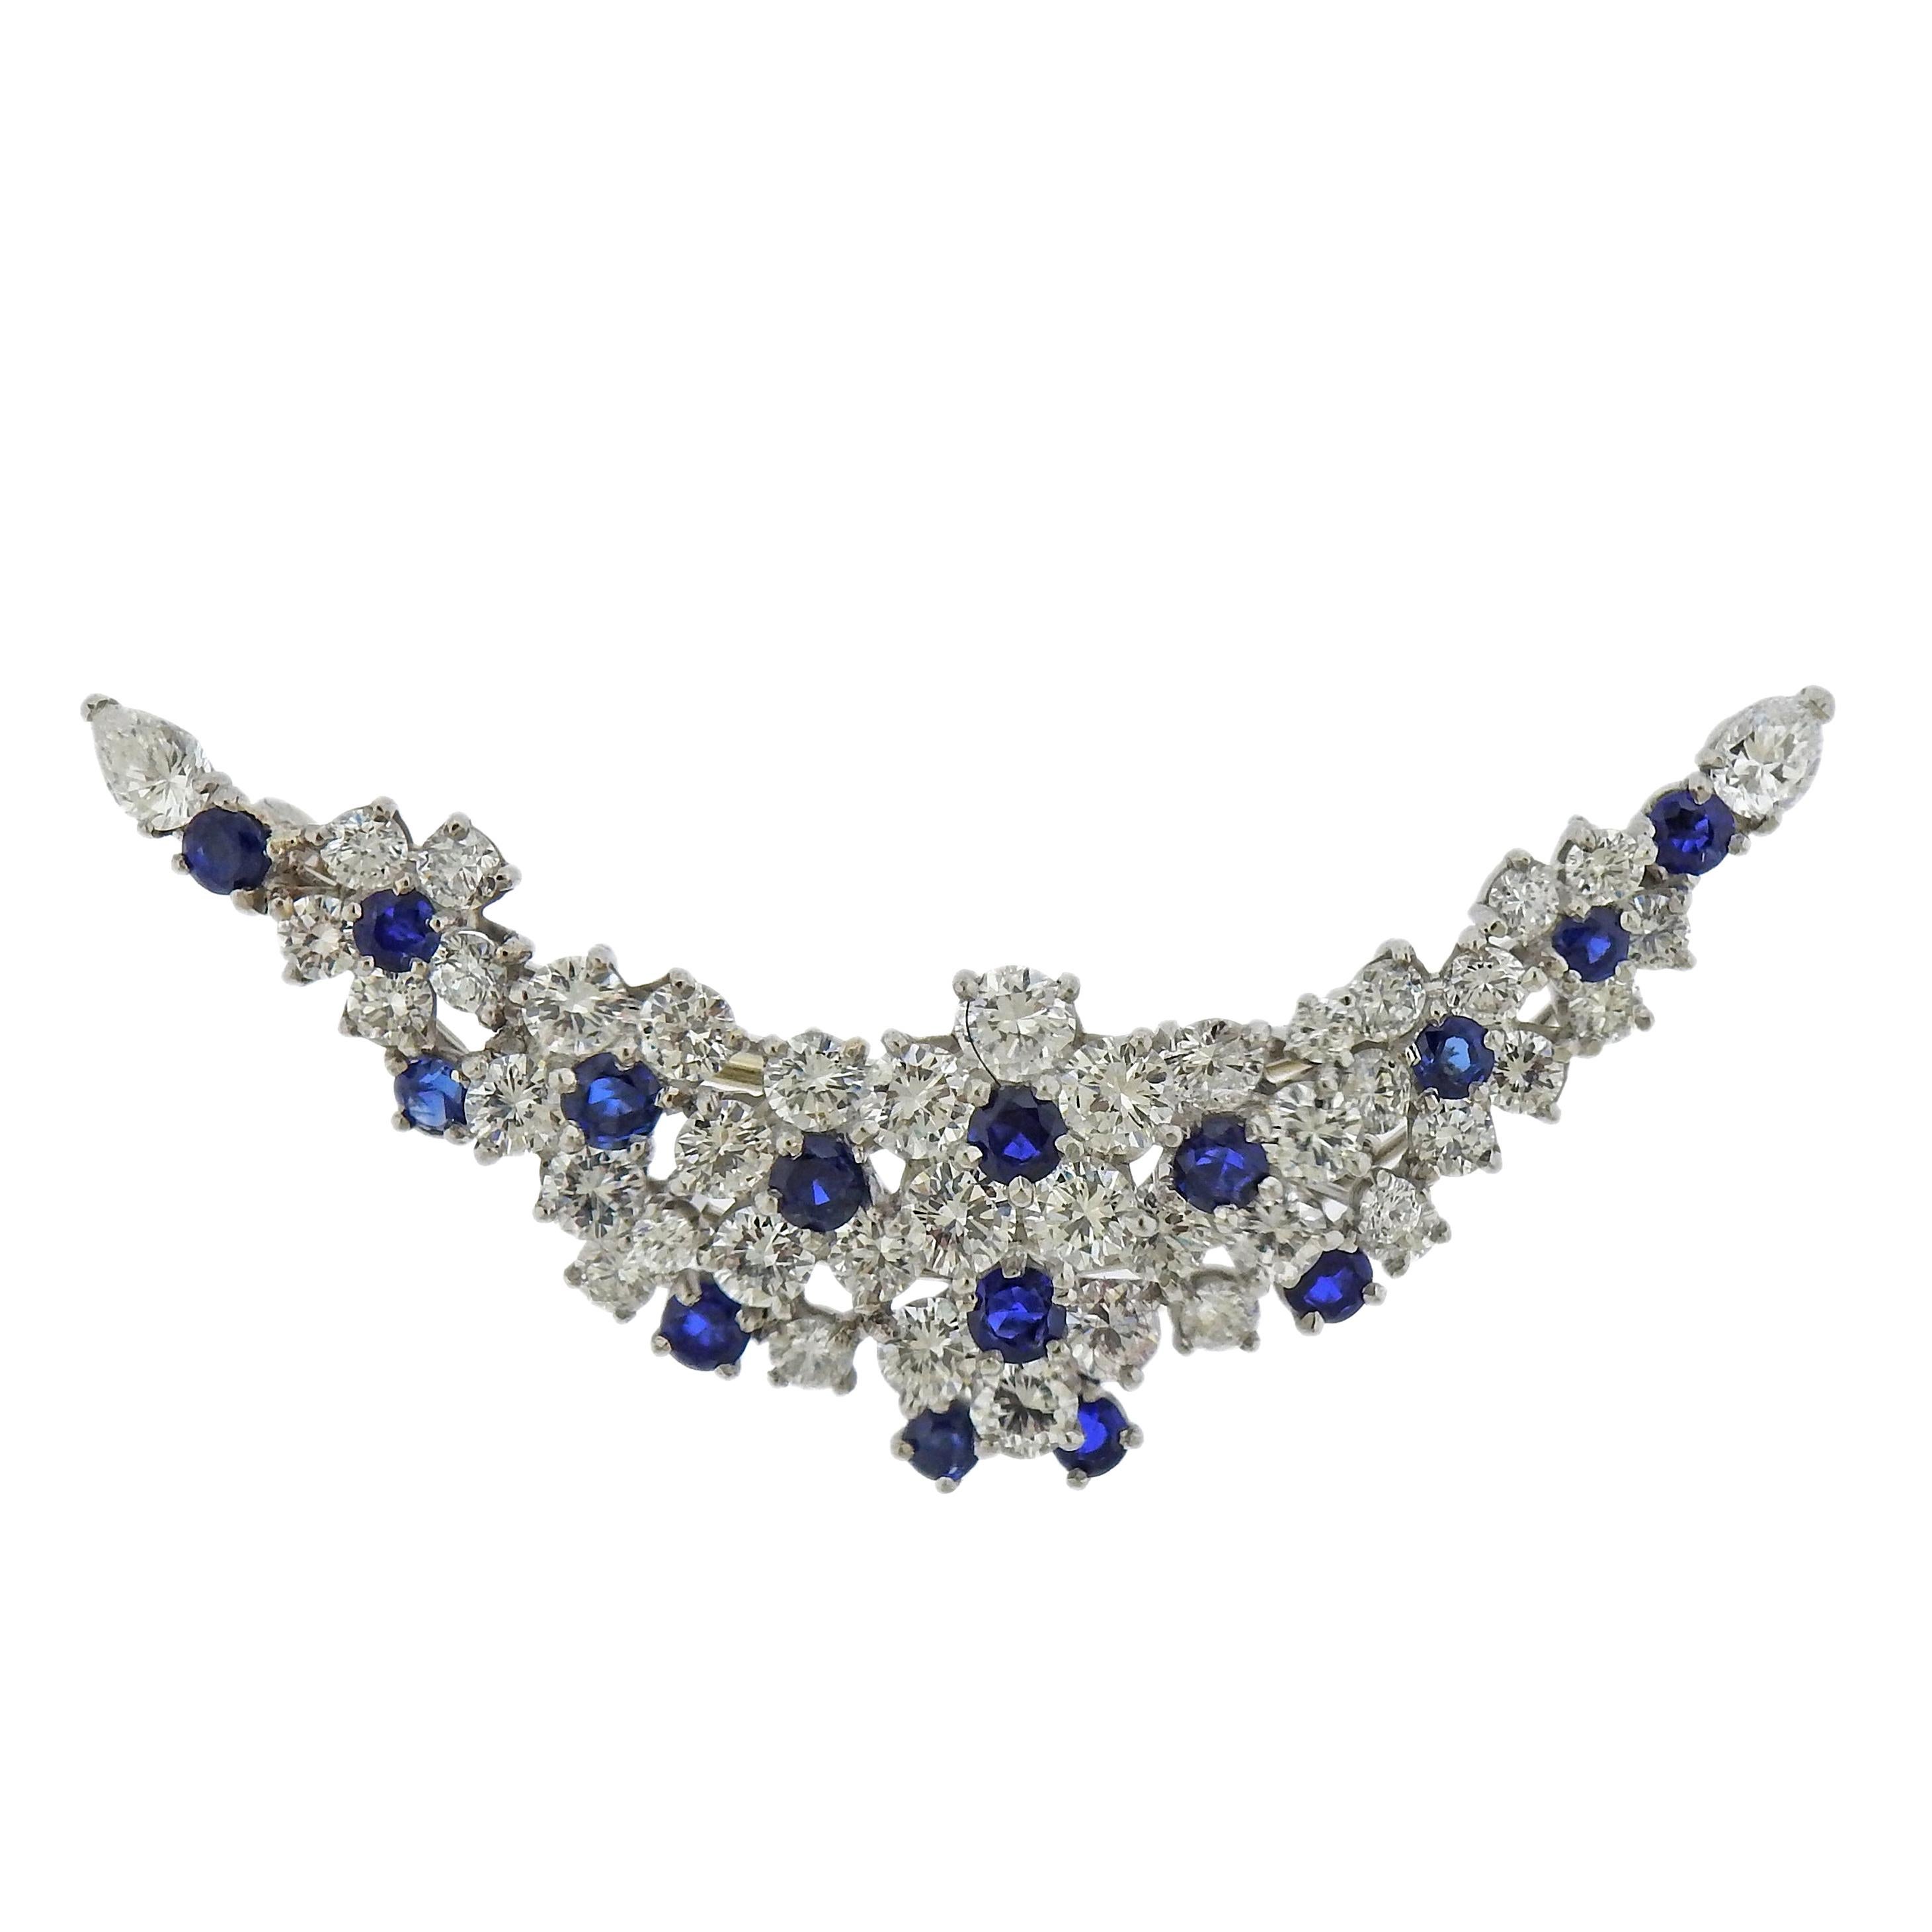 Oscar Heyman Bros. Exquisite Platinum Diamond Sapphire Brooch